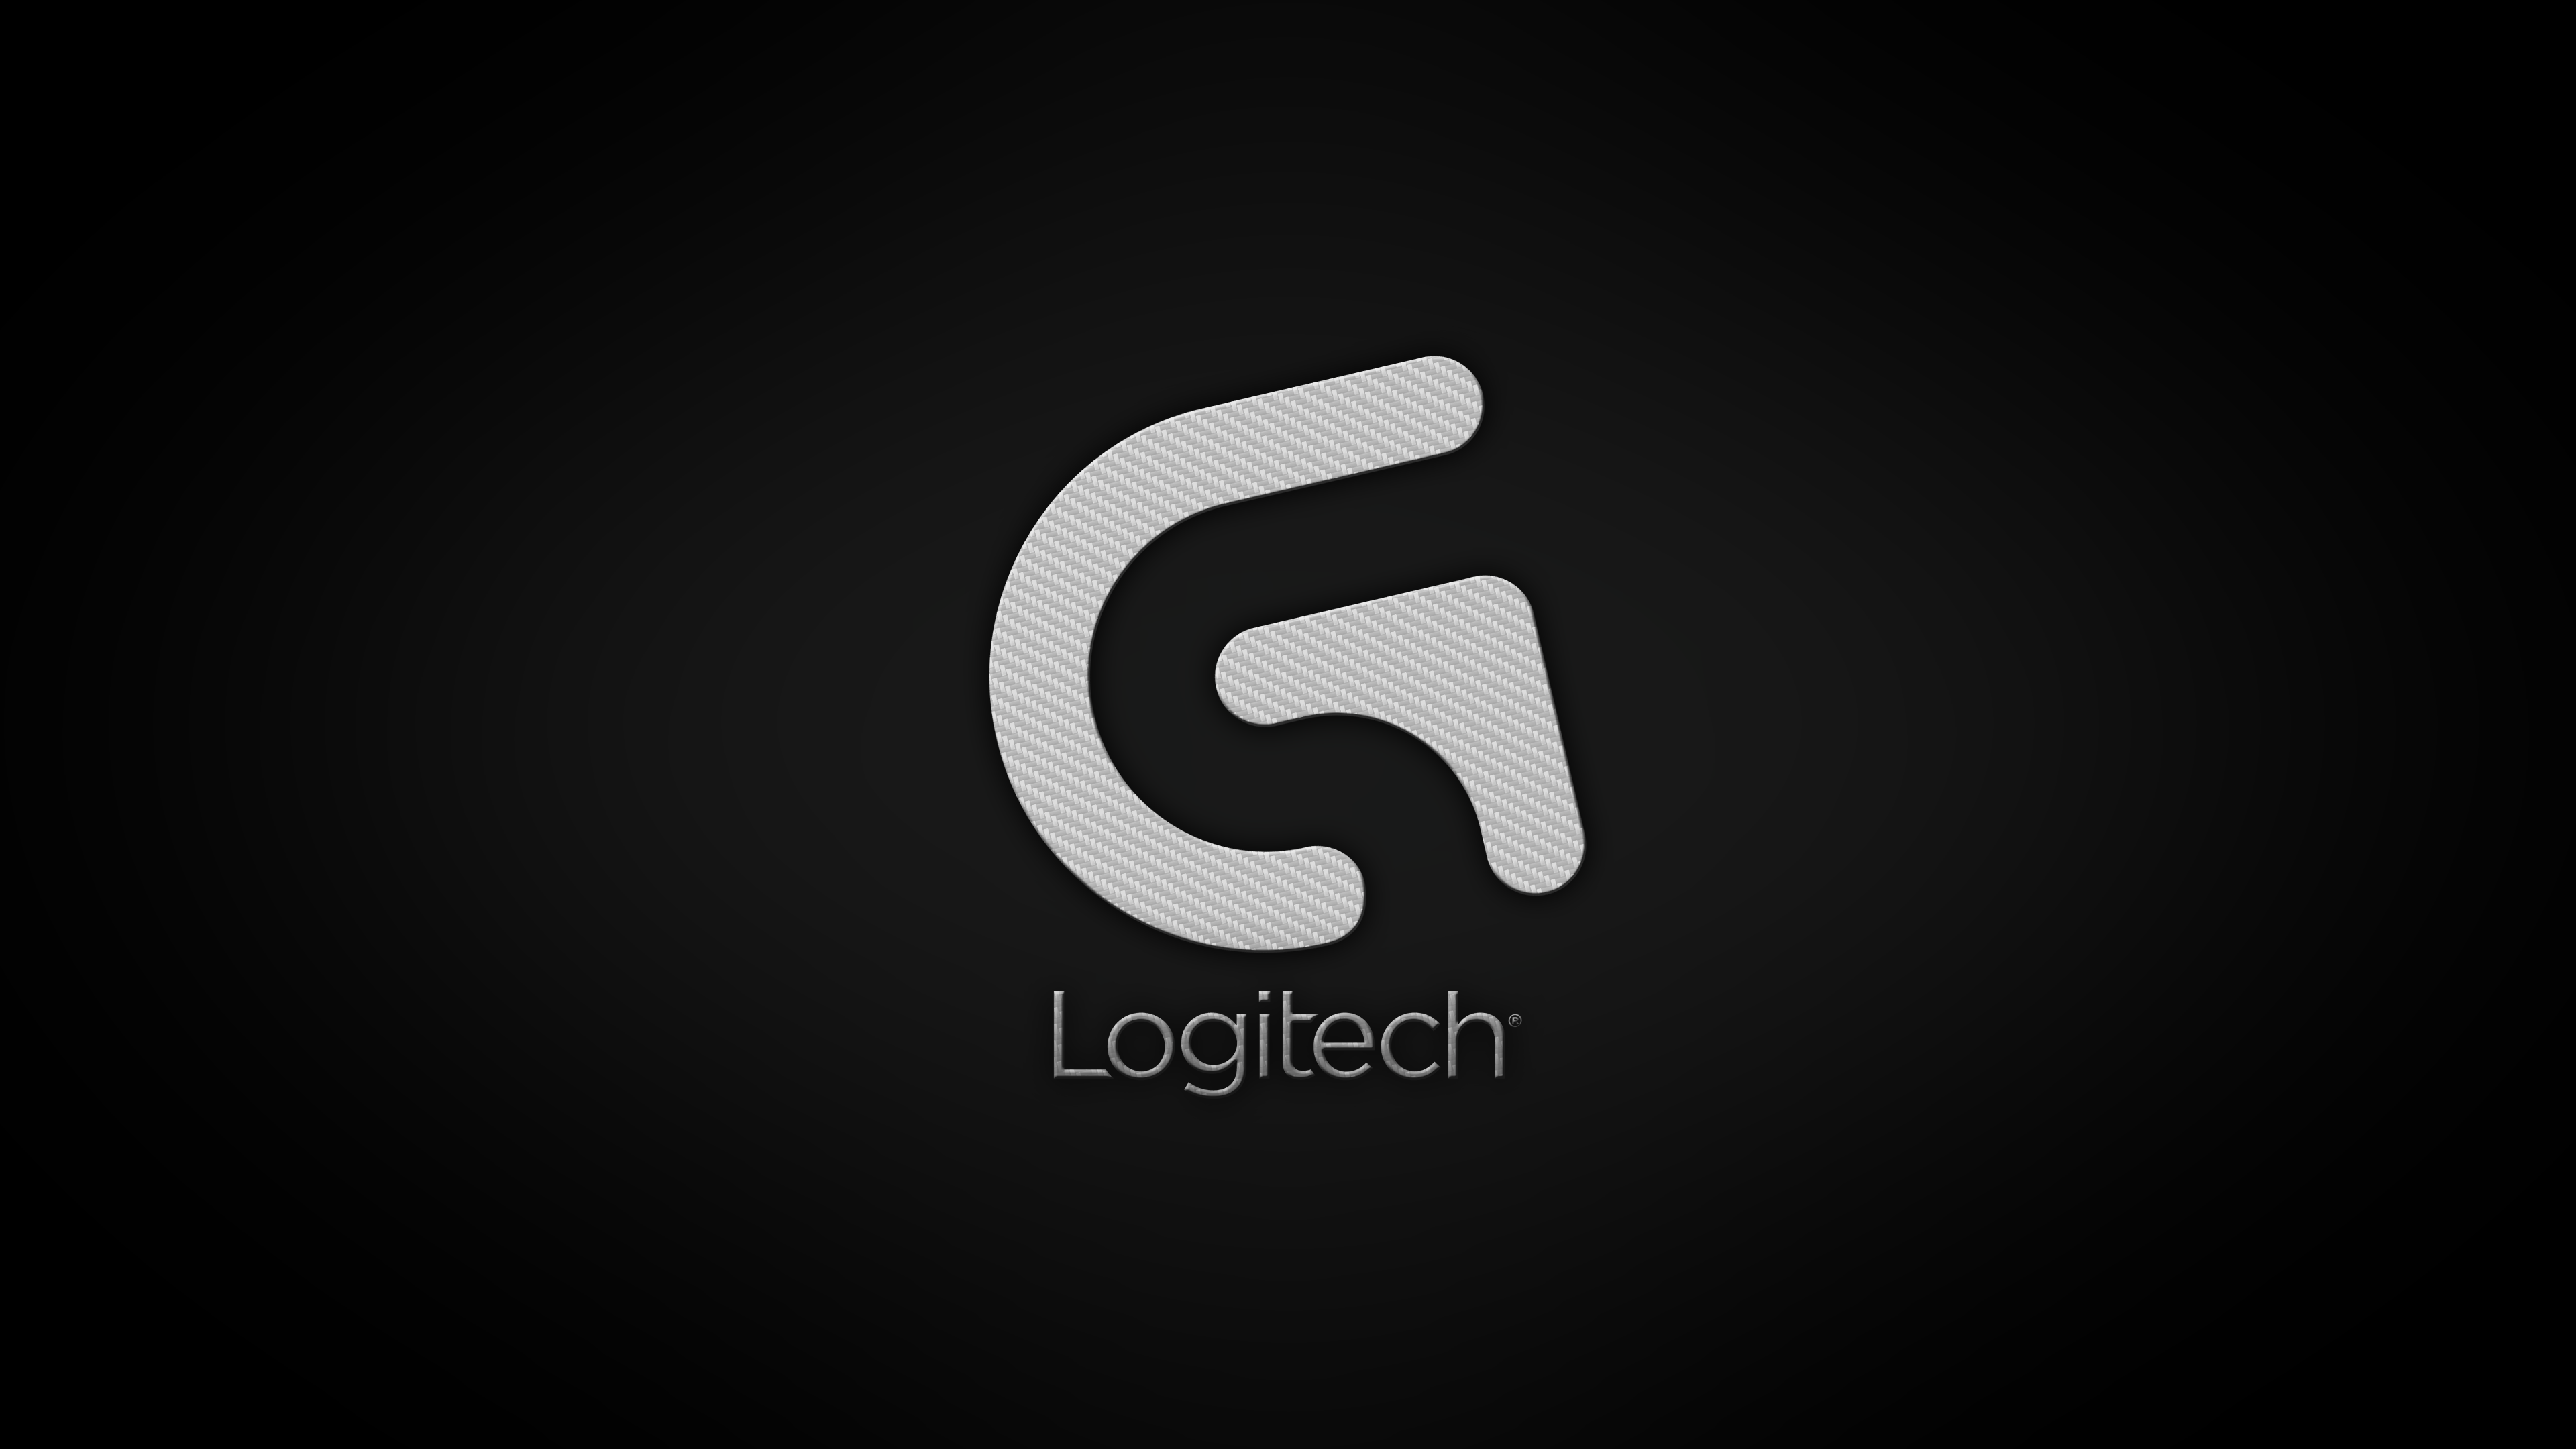 General 3840x2160 logo technology minimalism monochrome simple background black background brand